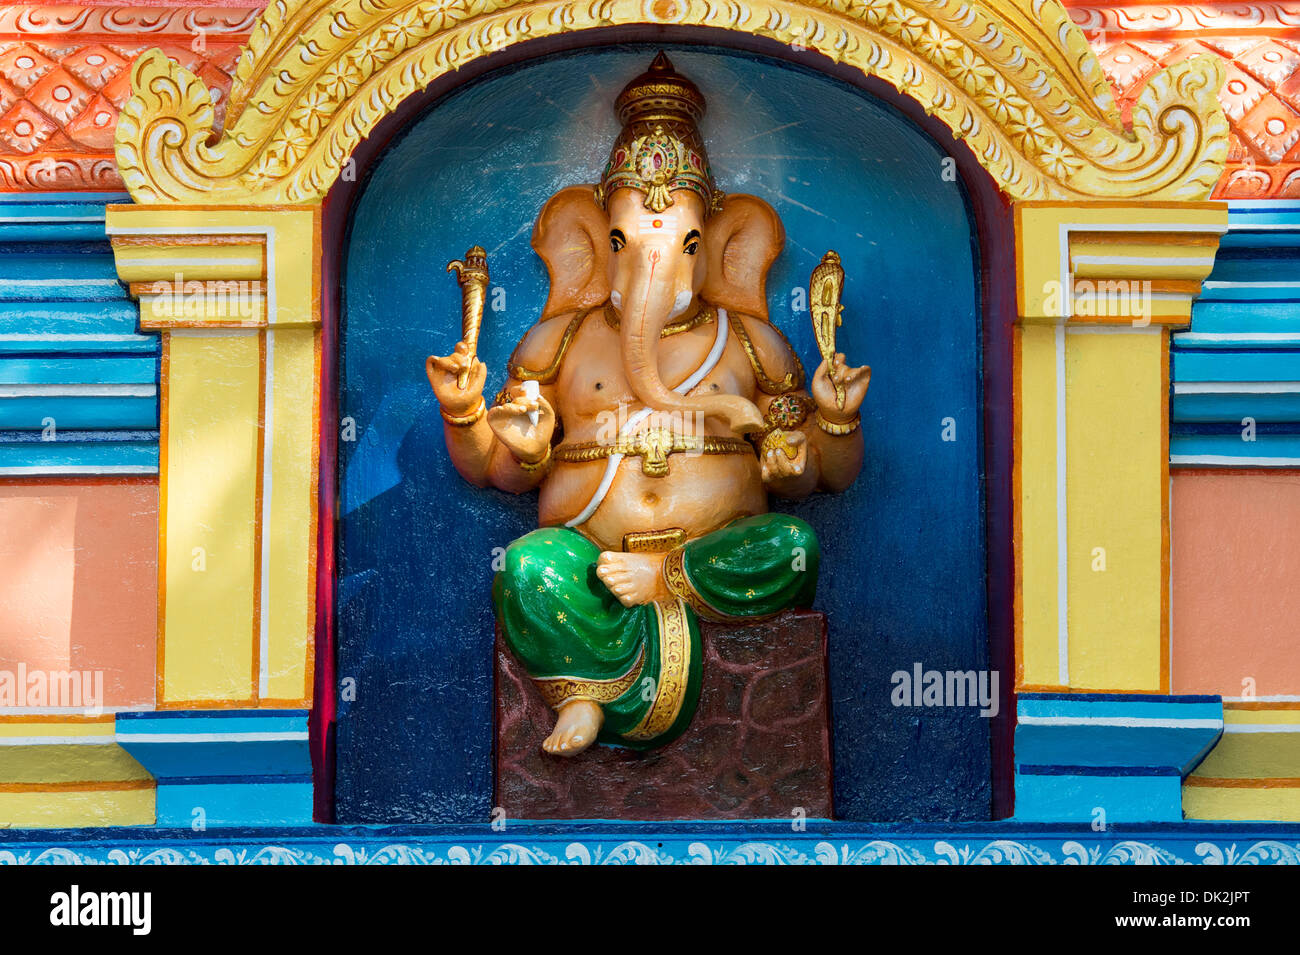 Hindu temple Ganesha statue. Puttaparthi, Andhra Pradesh, India Stock Photo